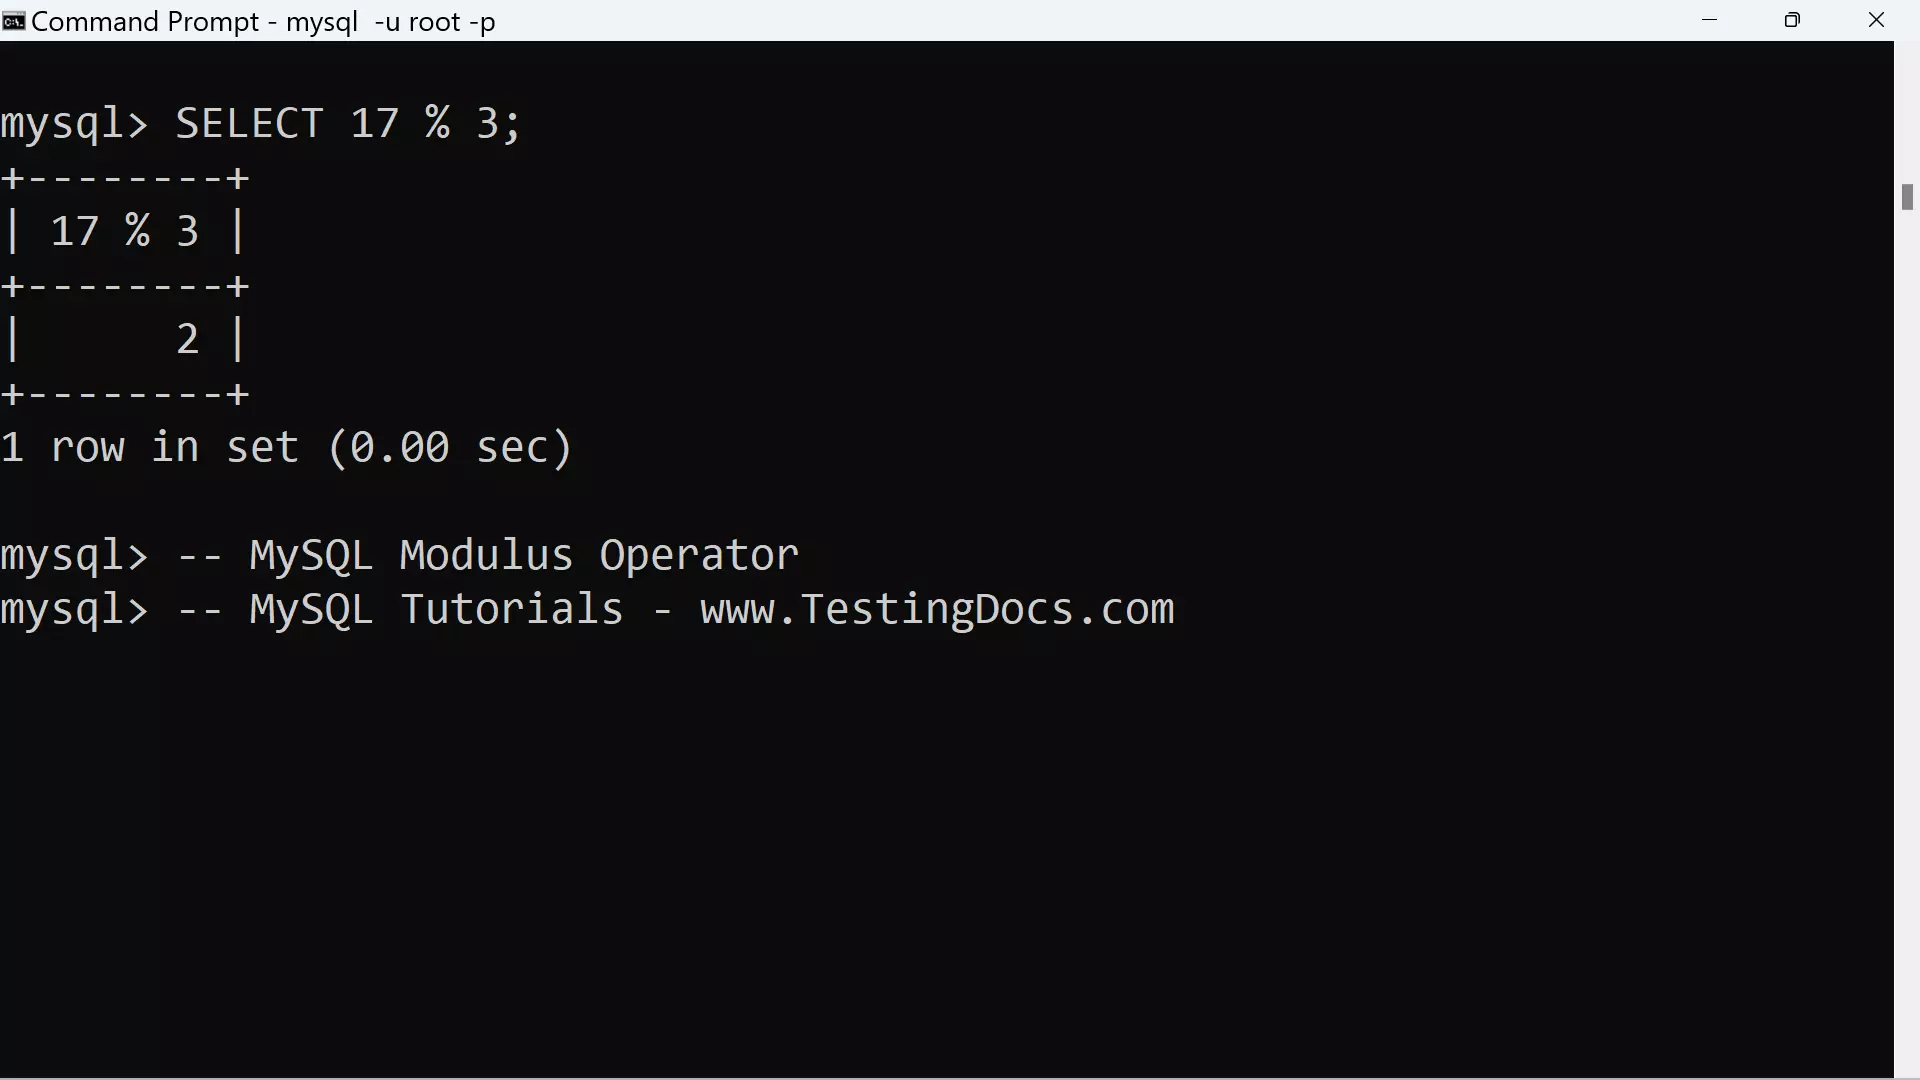 MySQL Modulus Operator